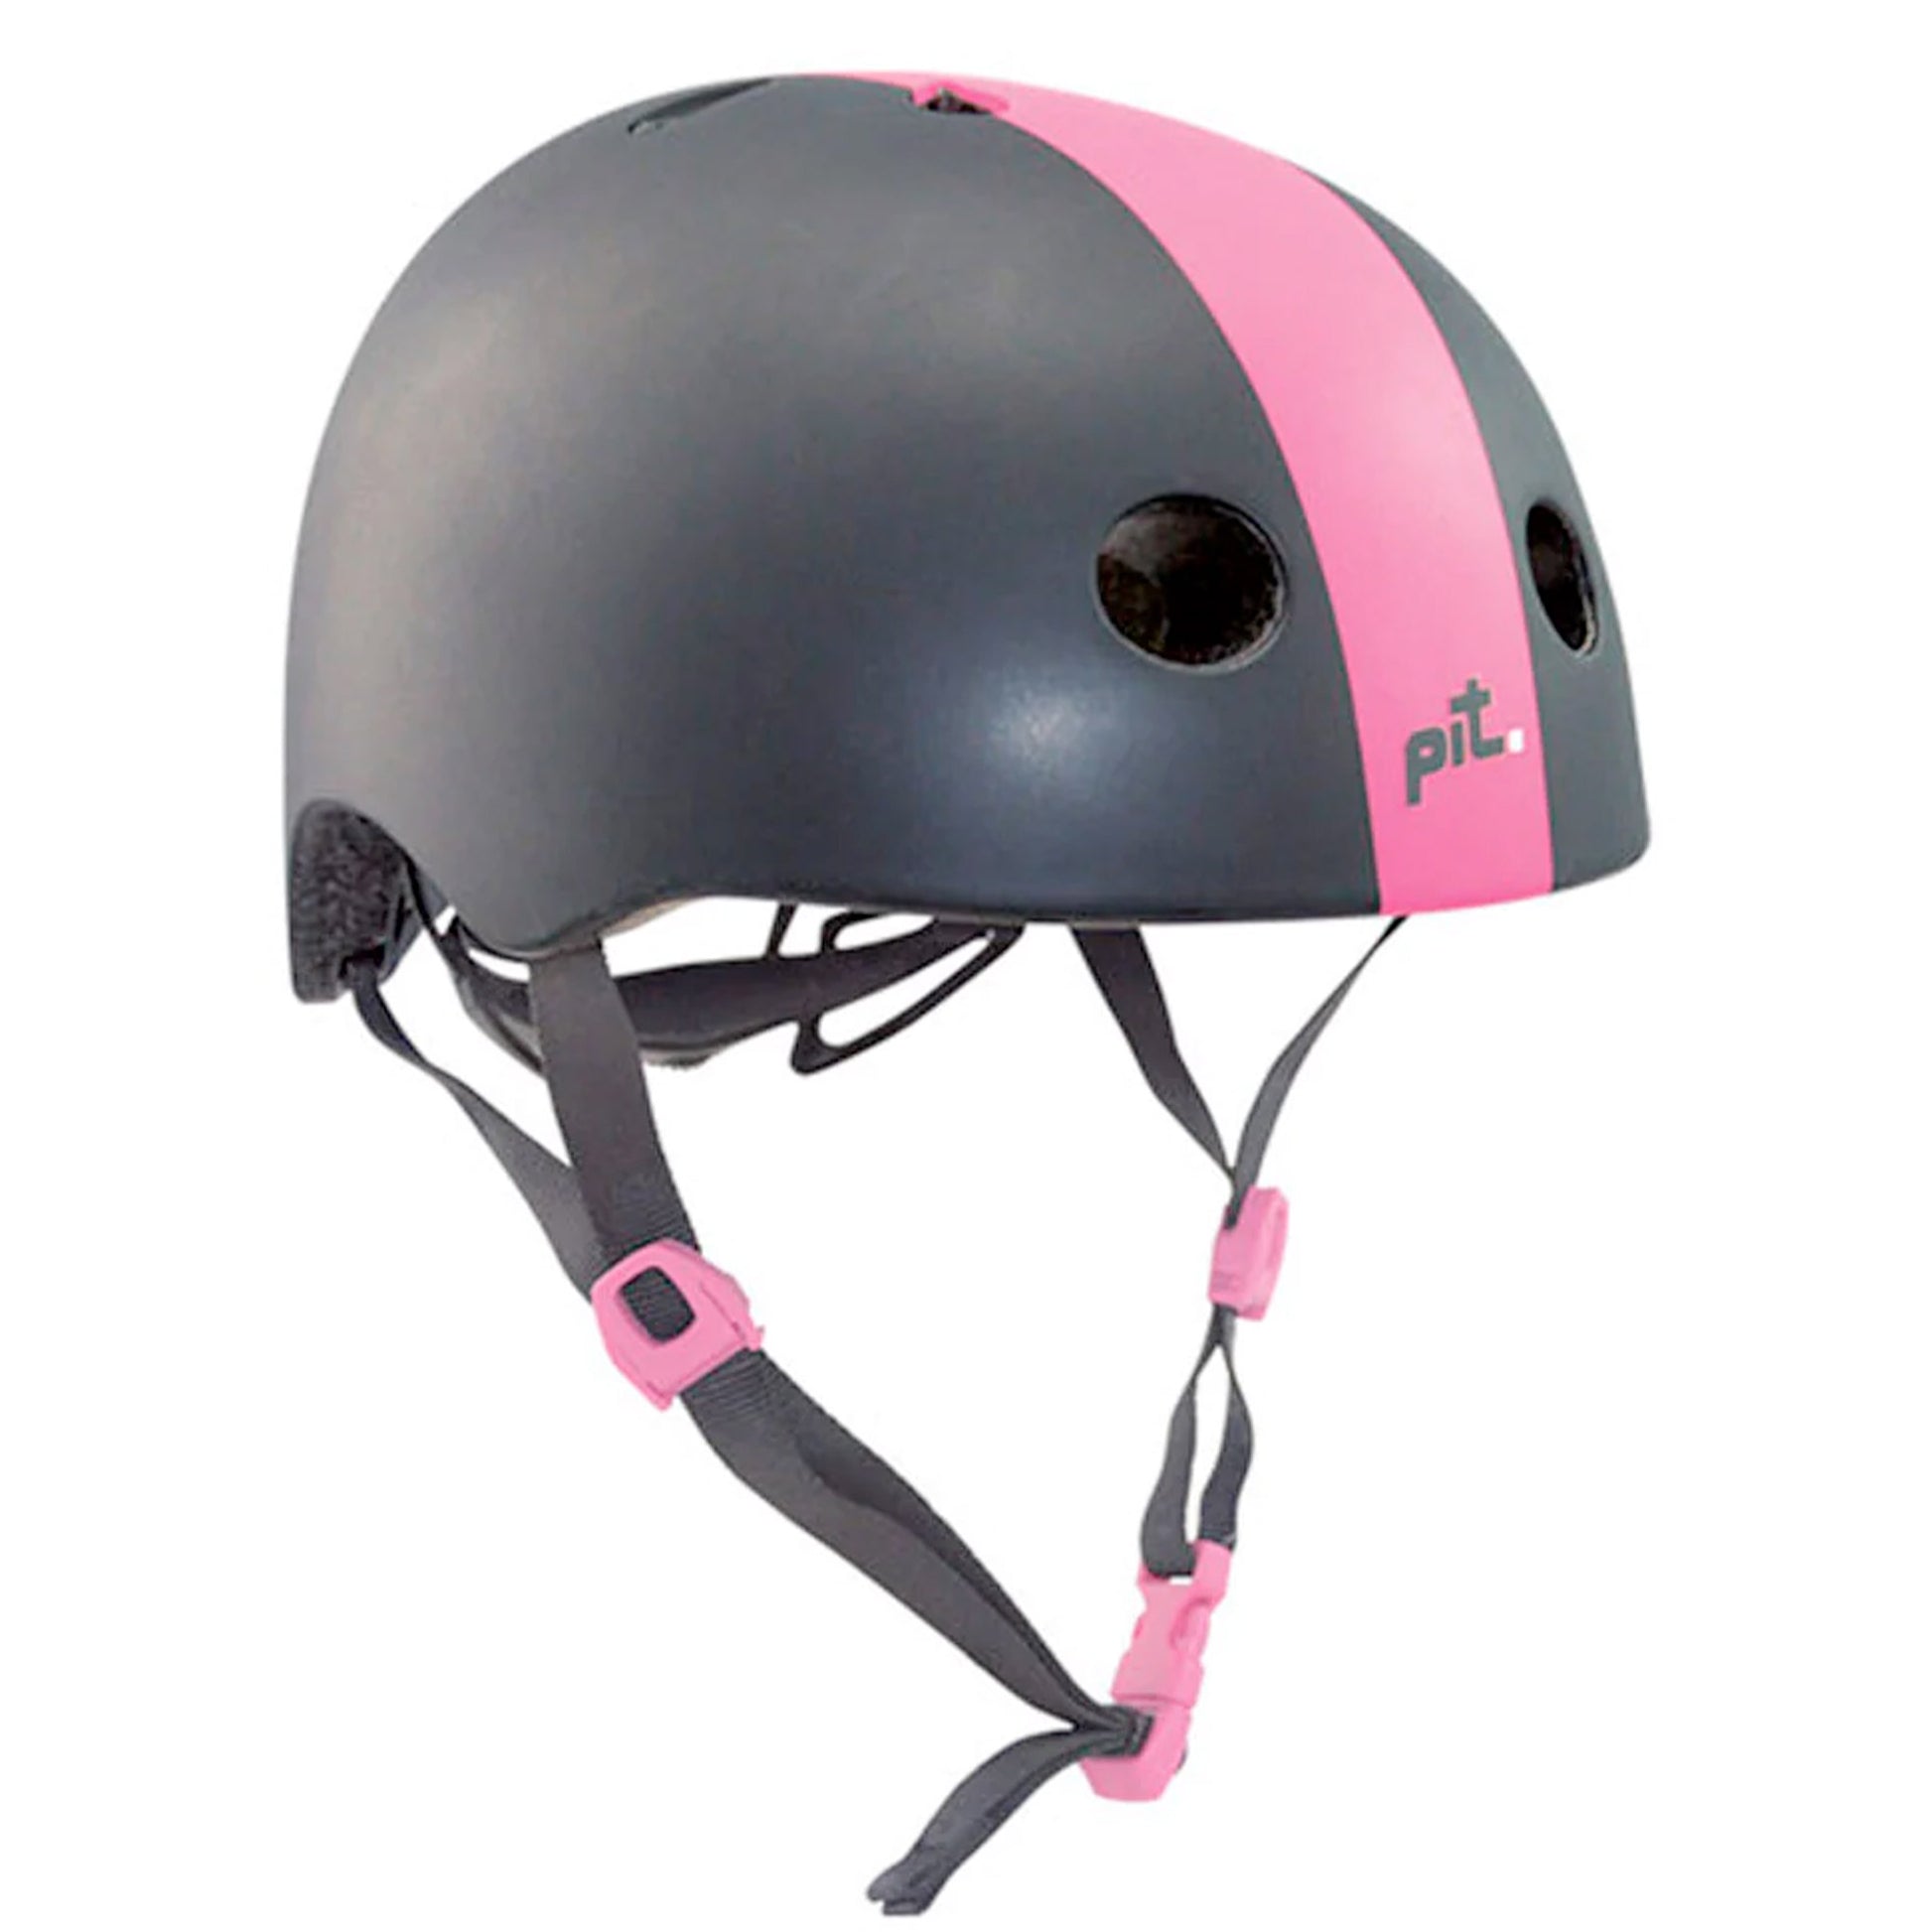 Pit Urban Bike & Skate Helmet, Matte Black/Matte Pink